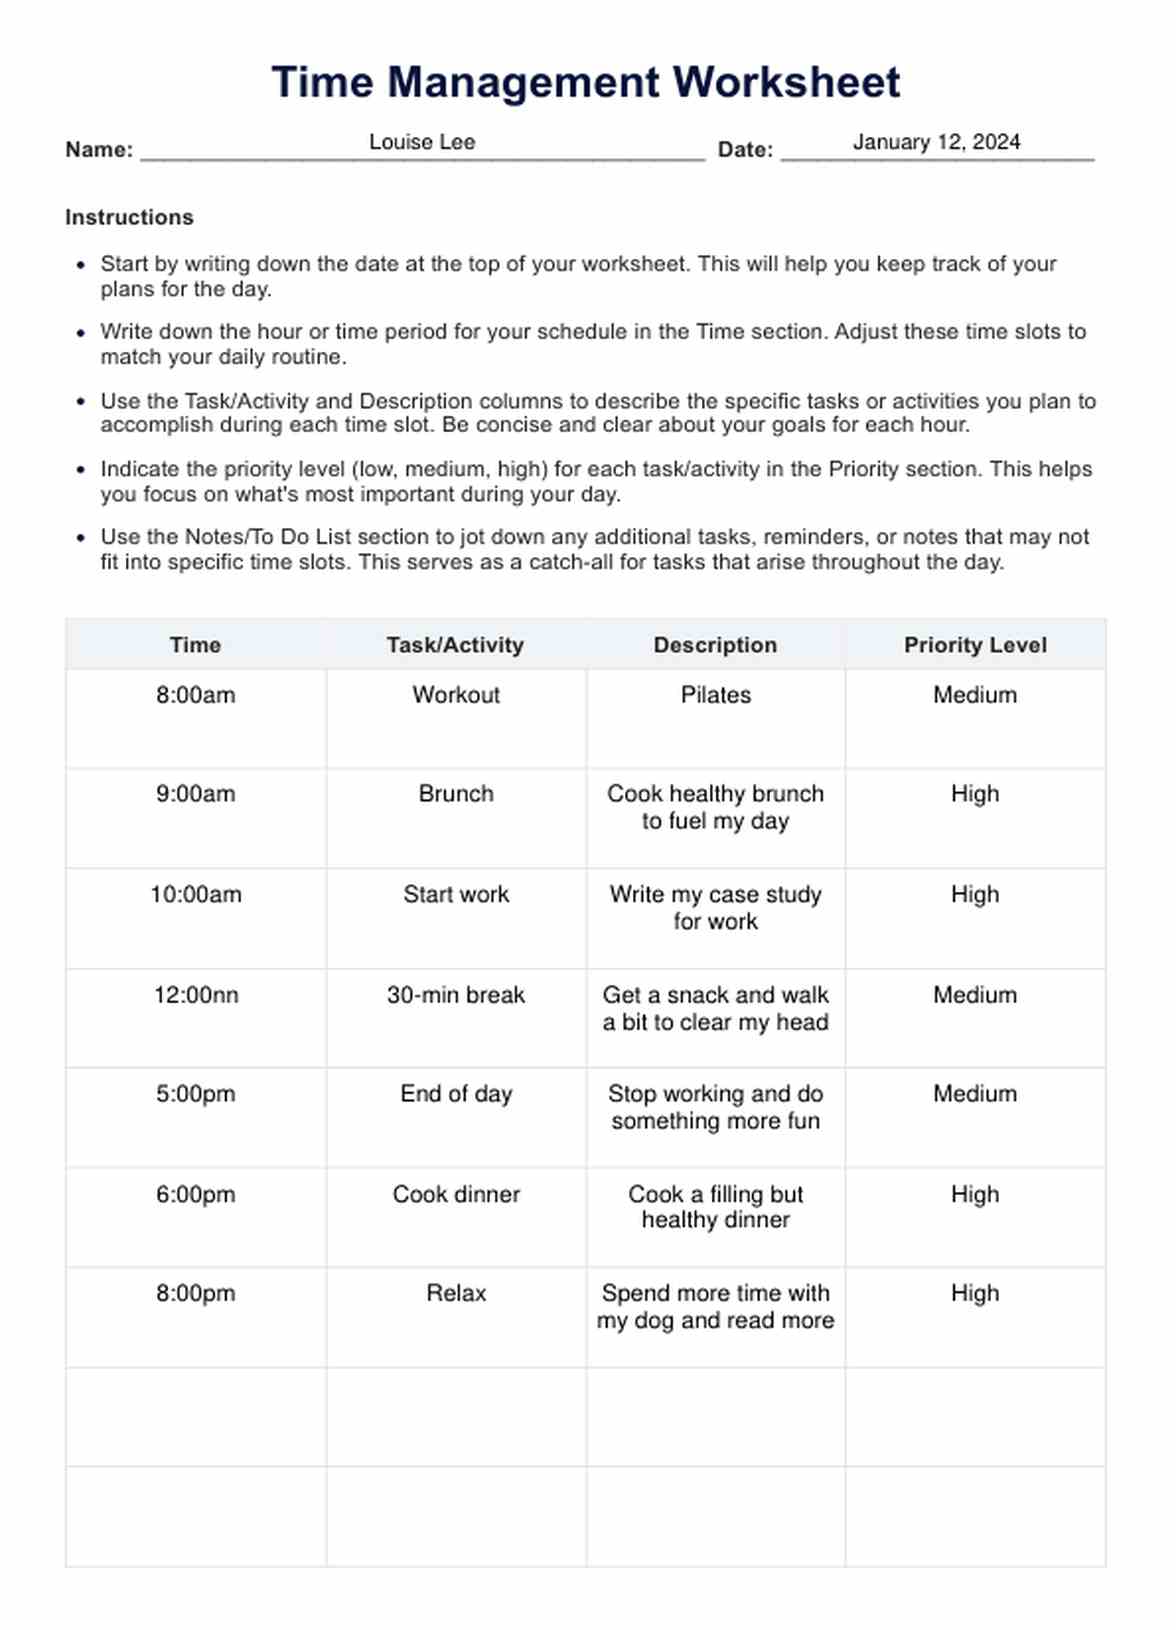 Time Management Worksheets PDF Example